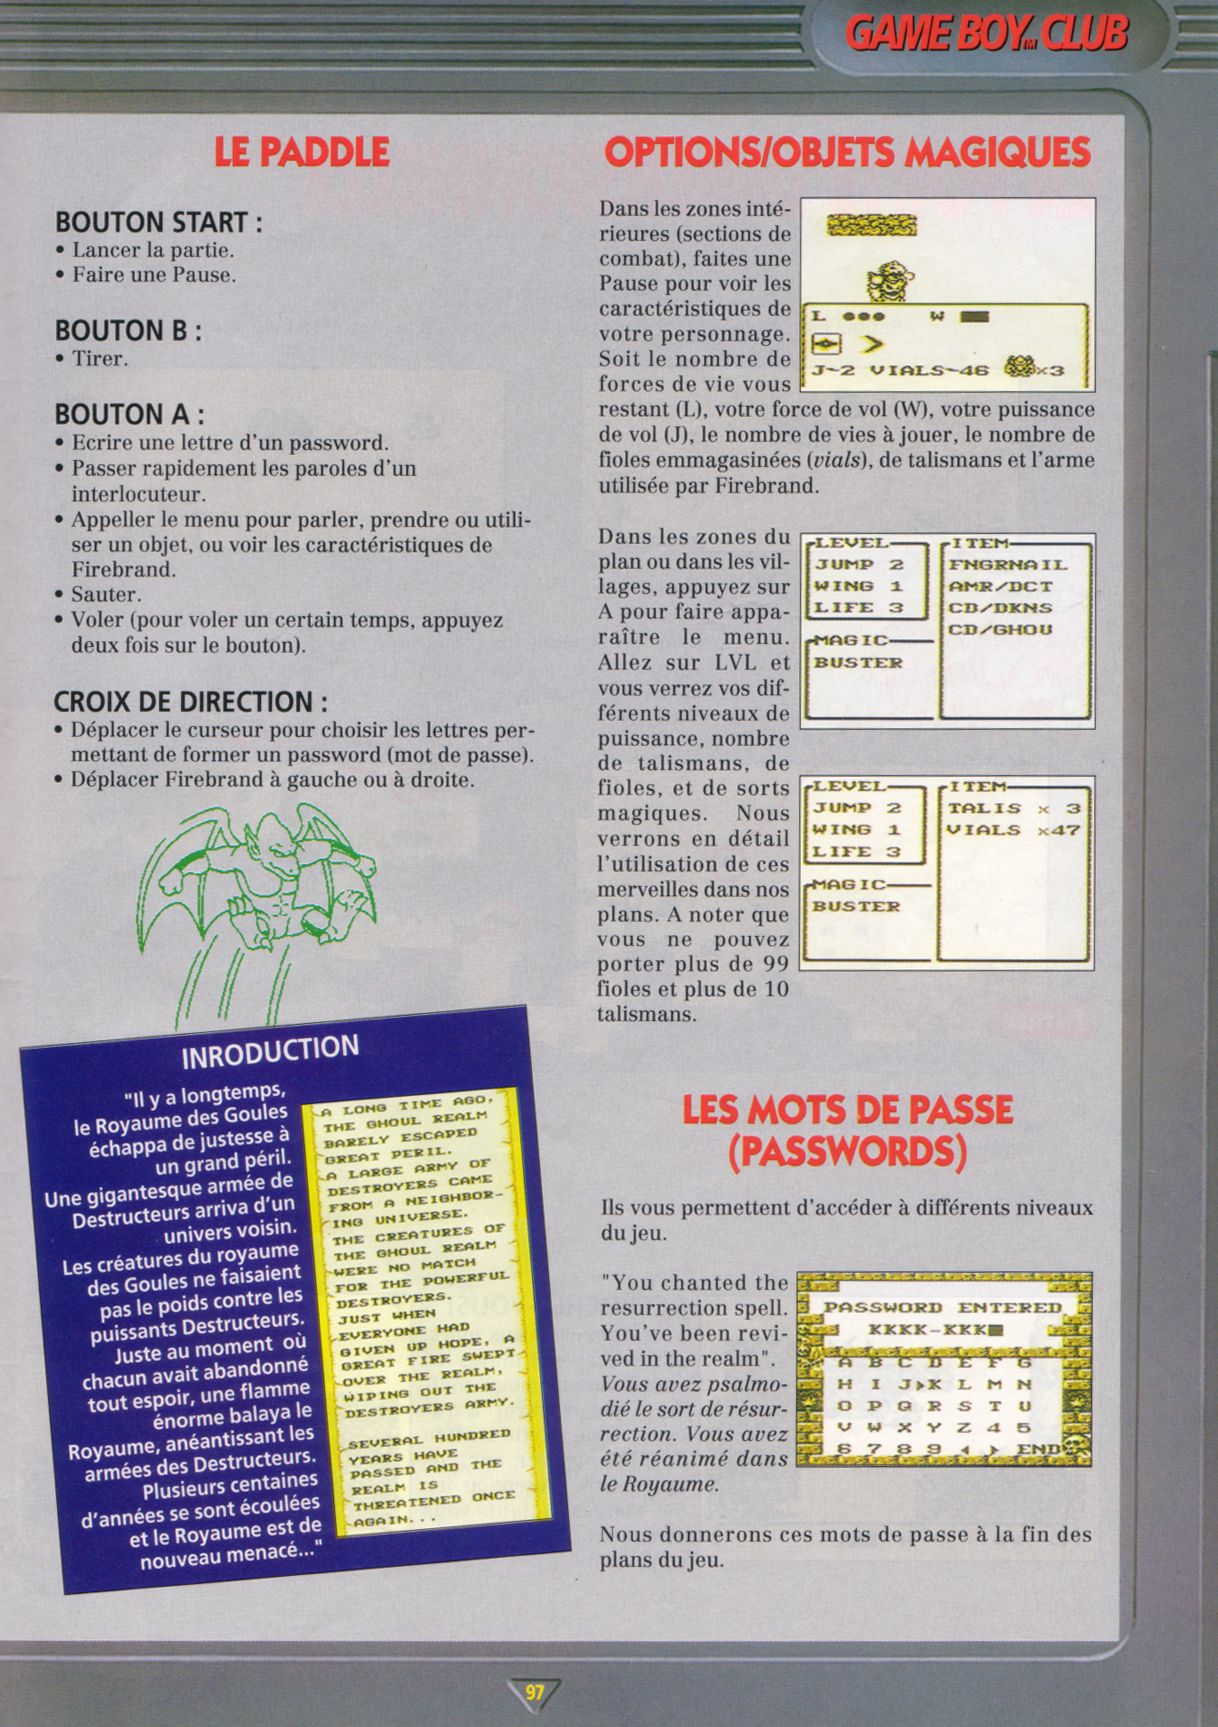 tests//1155/Nintendo Player 004 - Page 097 (1992-05-06).jpg